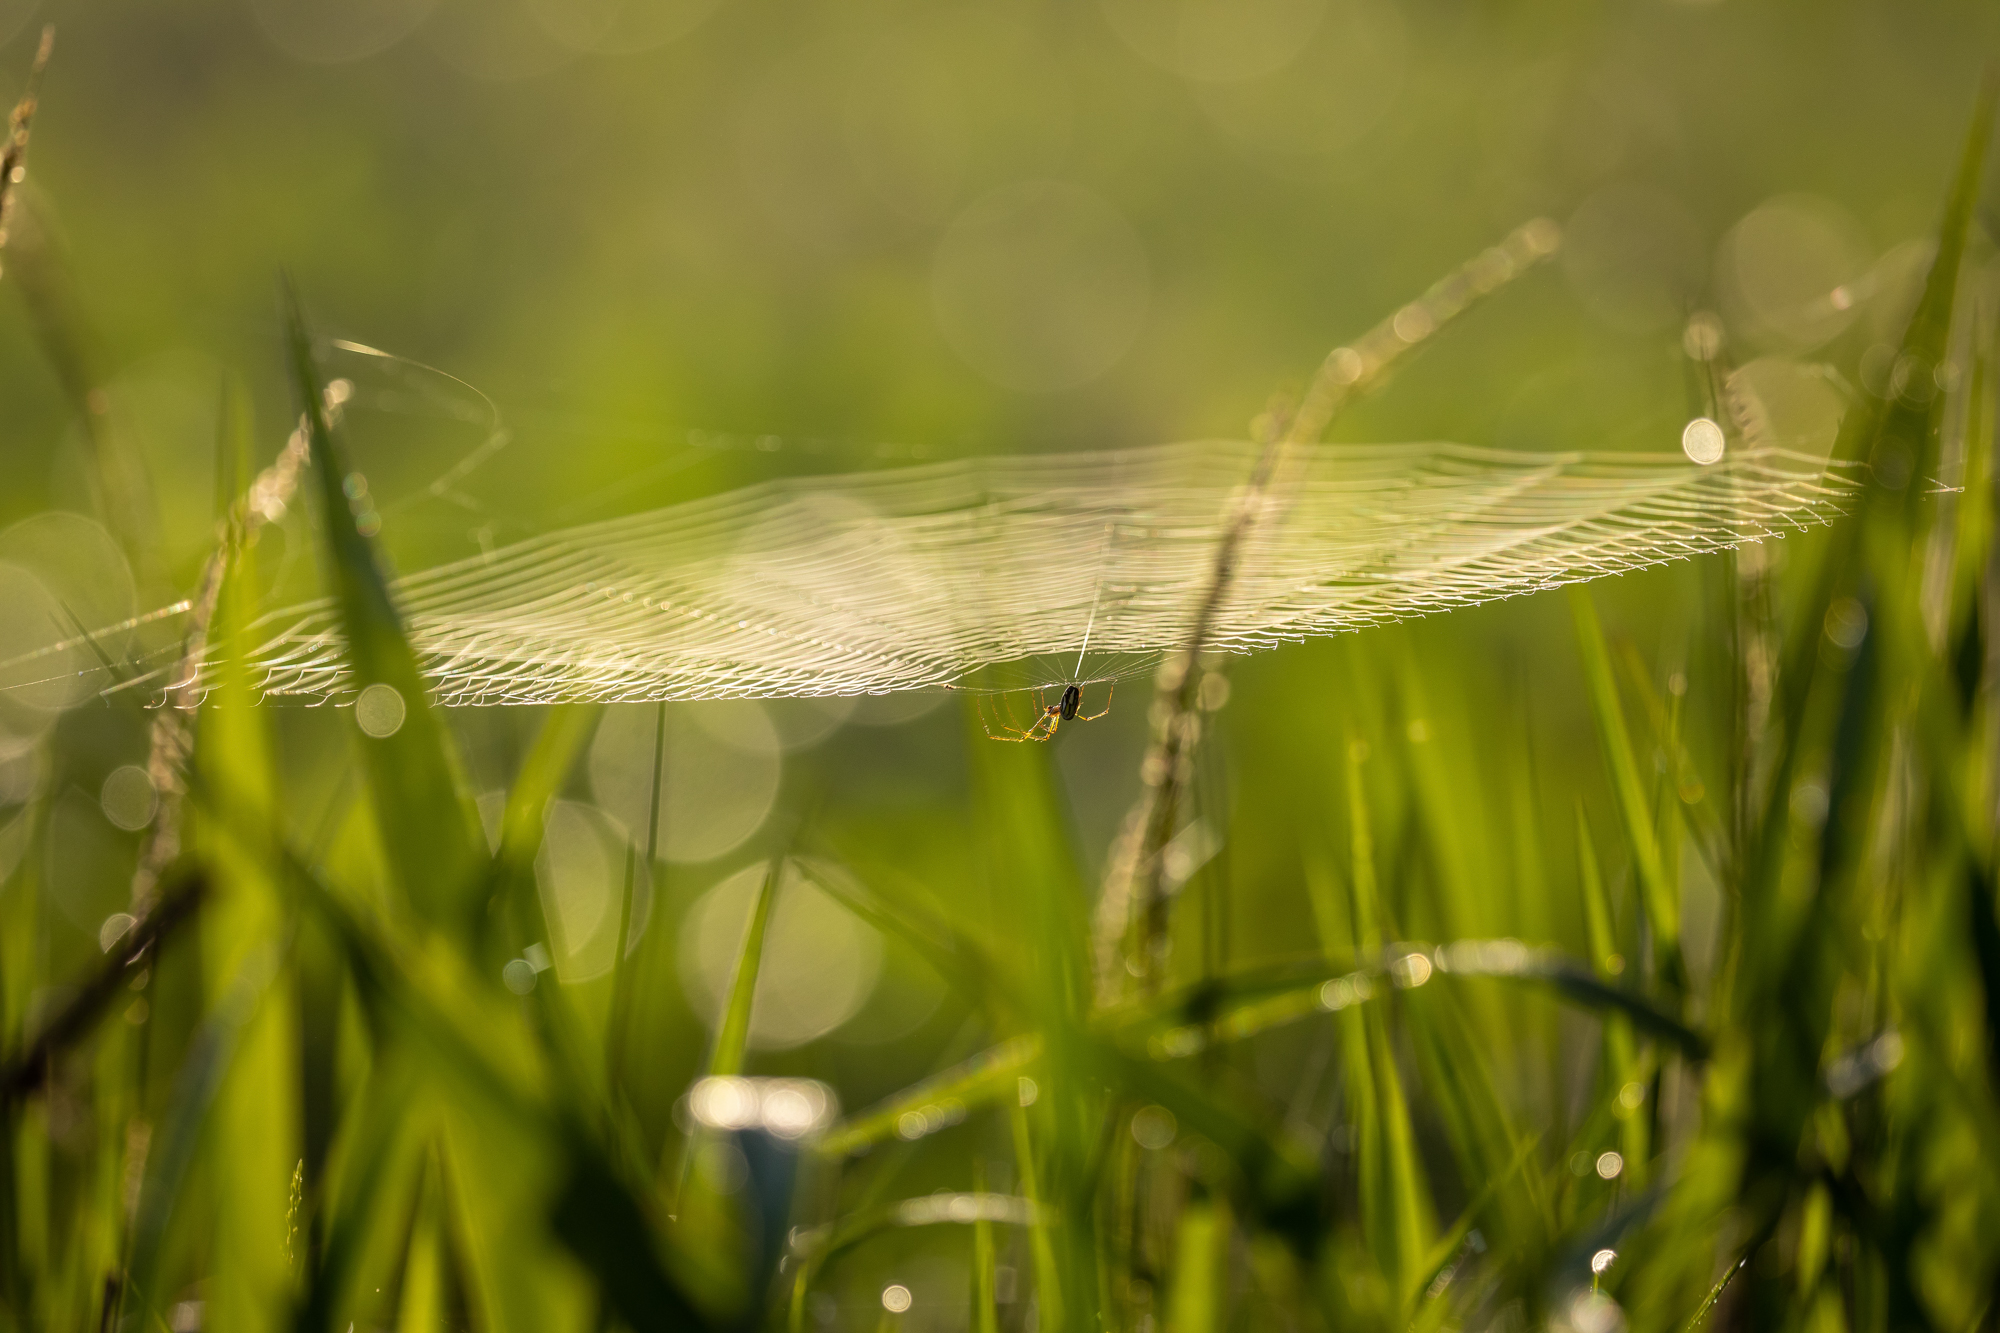 Spider web in morning light